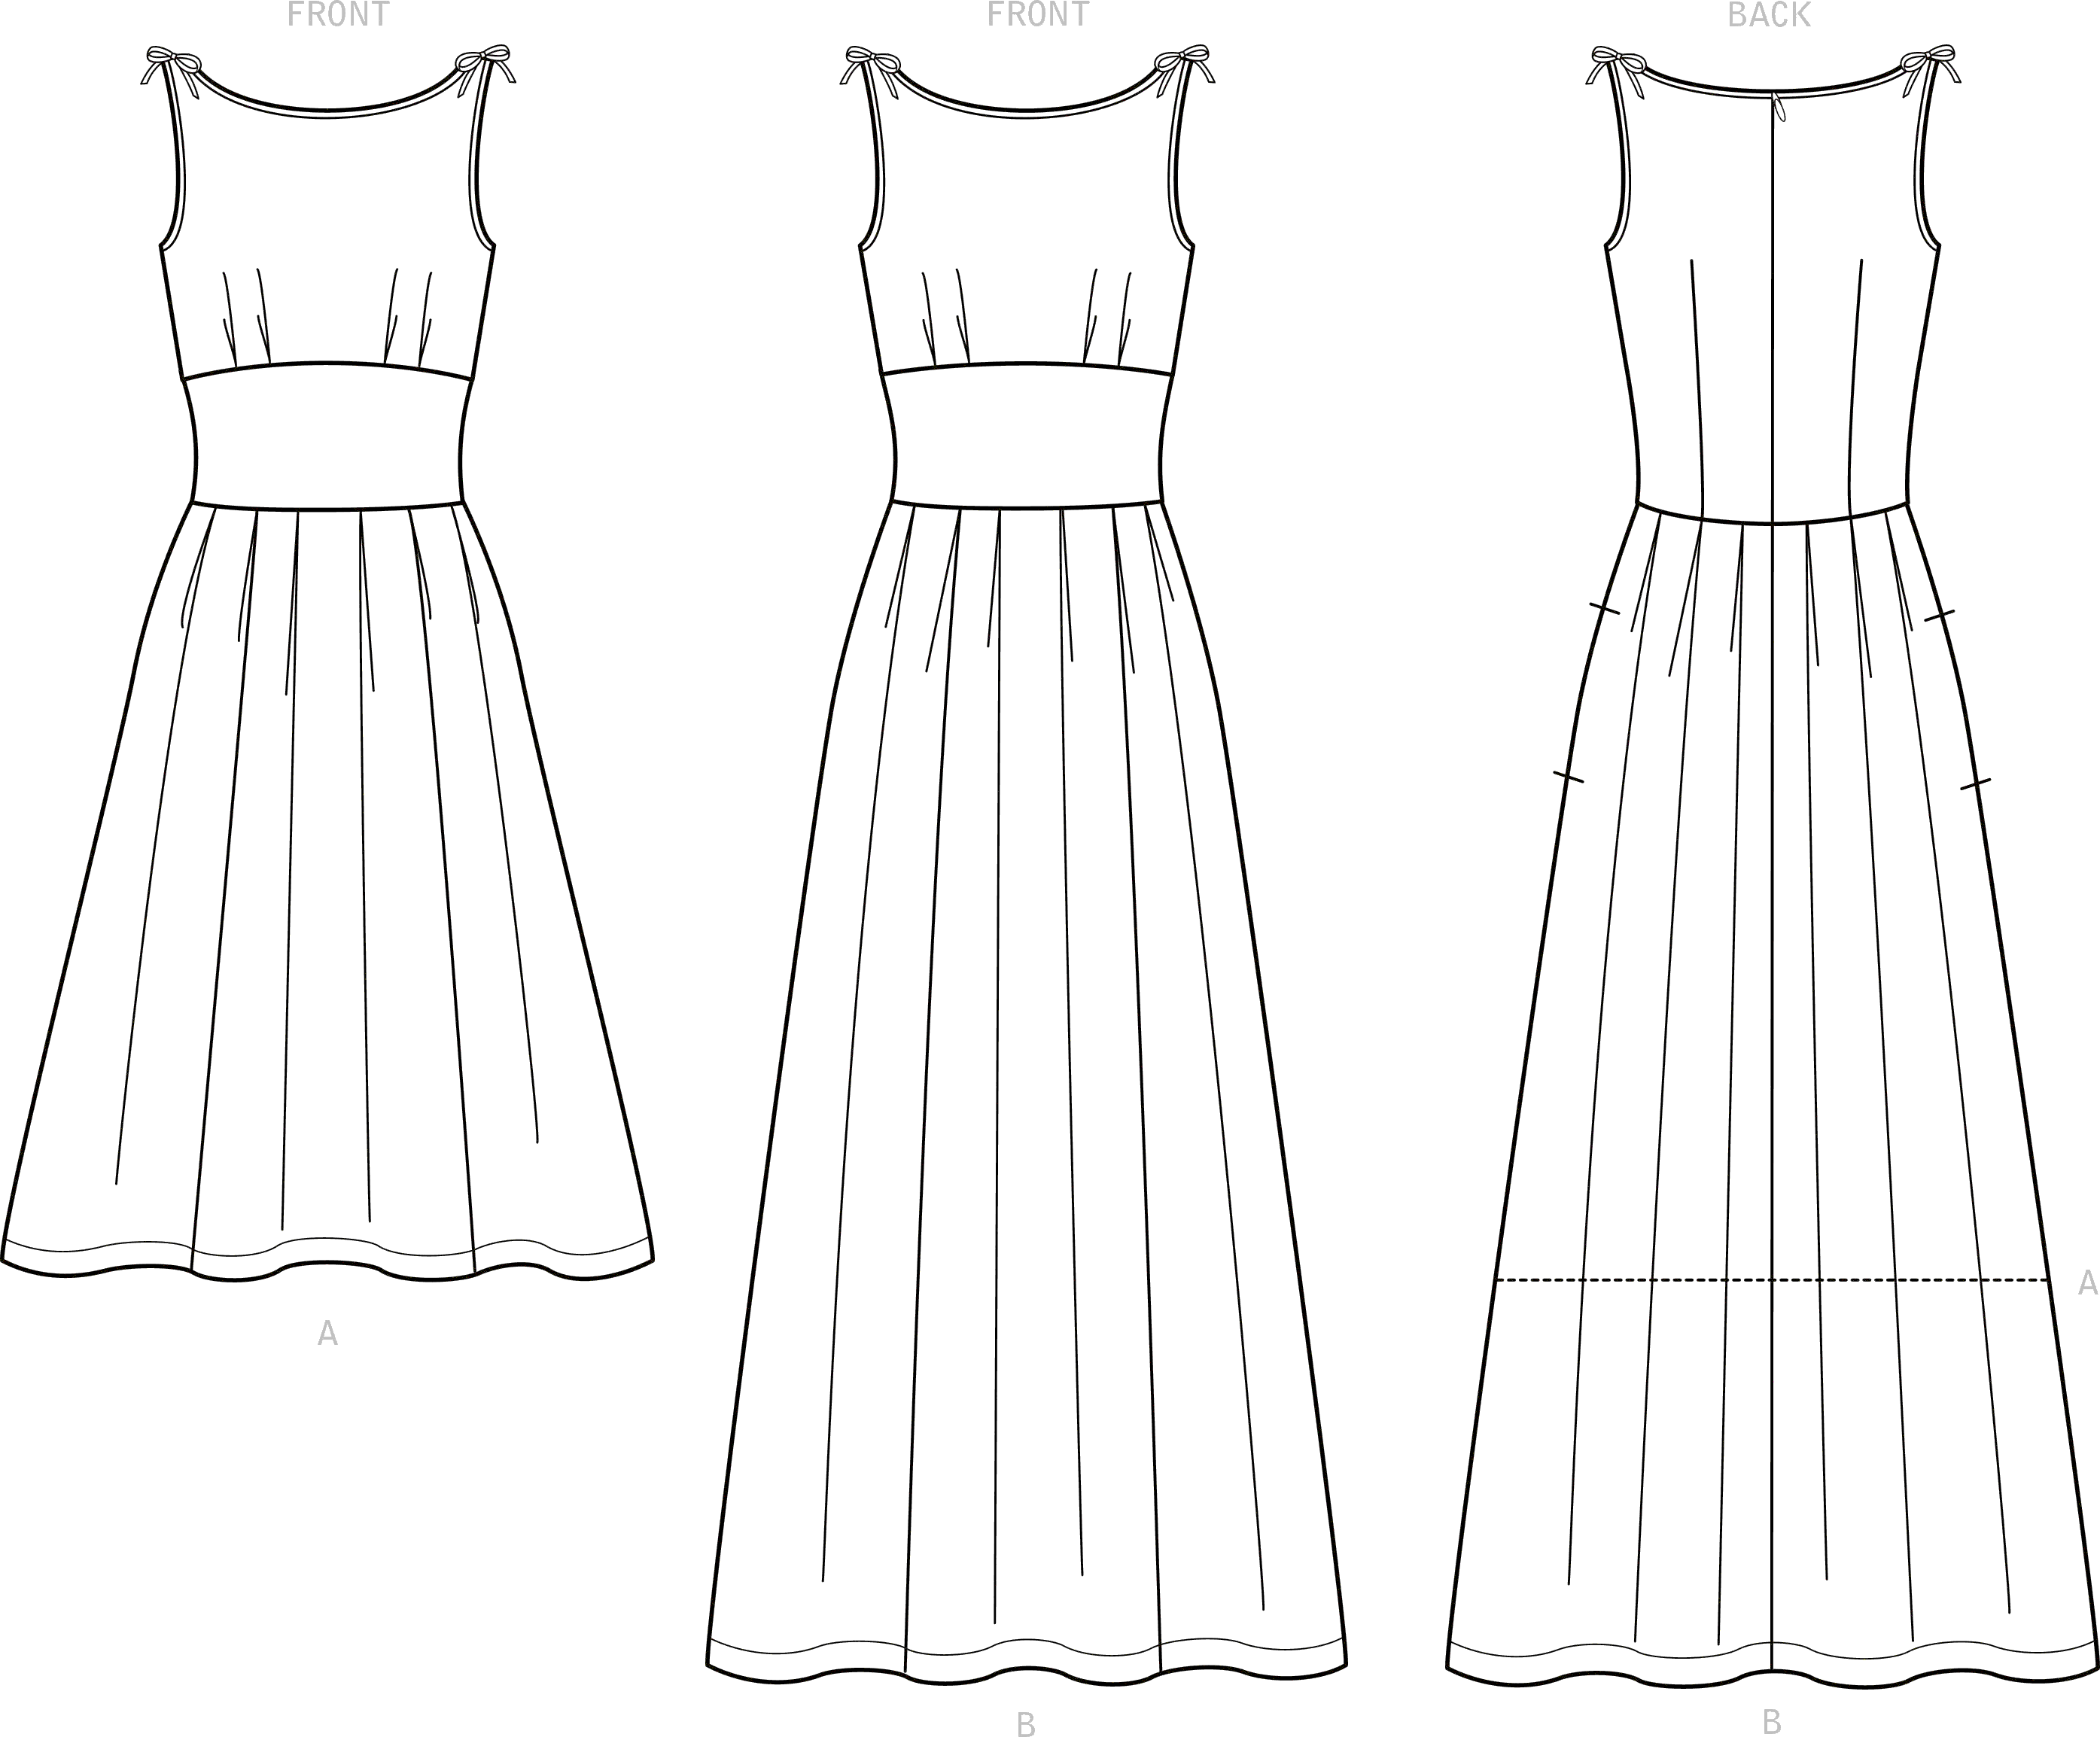 New Look Sewing Pattern N6665 Misses Dress 6665 Line Art From Patternsandplains.com